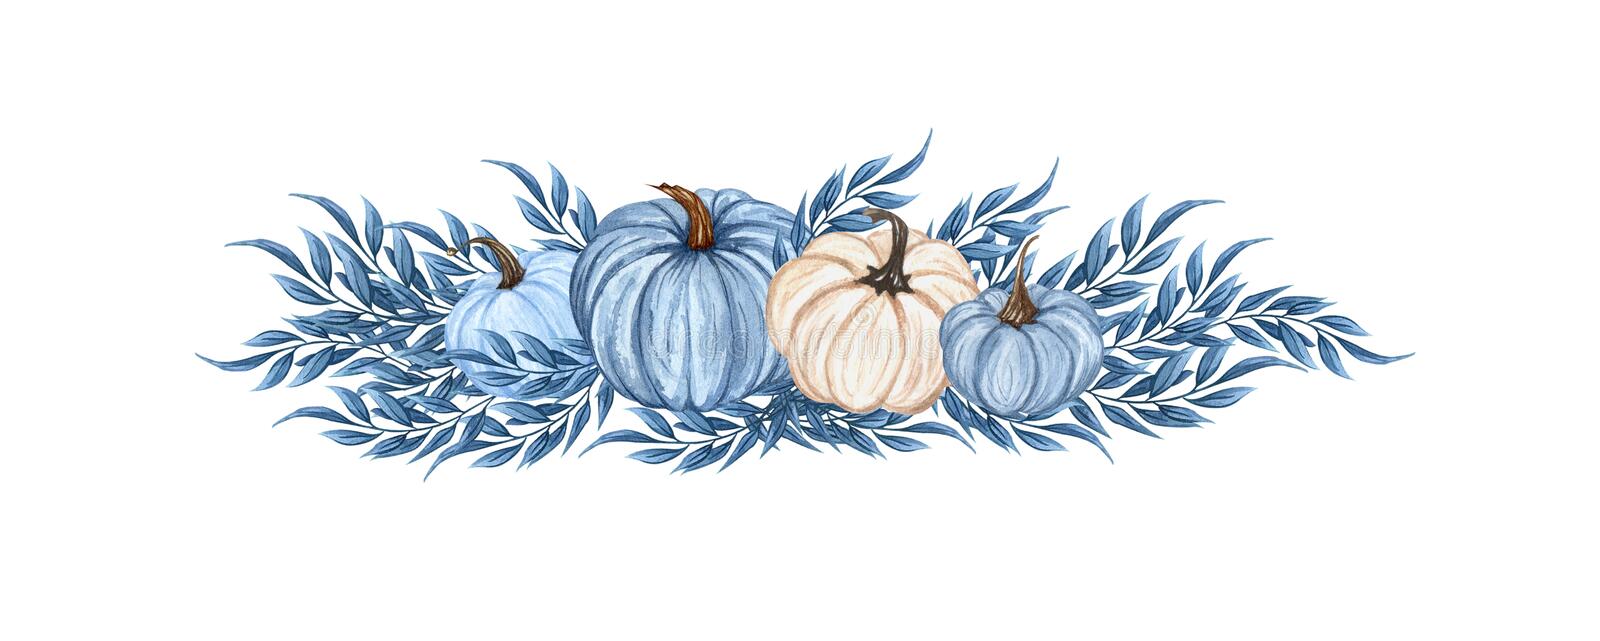 watercolor-blue-pumpkin-composition-floral-pumpkins-halloween-clip-art-autumn-design-elements-fall-arrangement-harvest-isolated-222557058